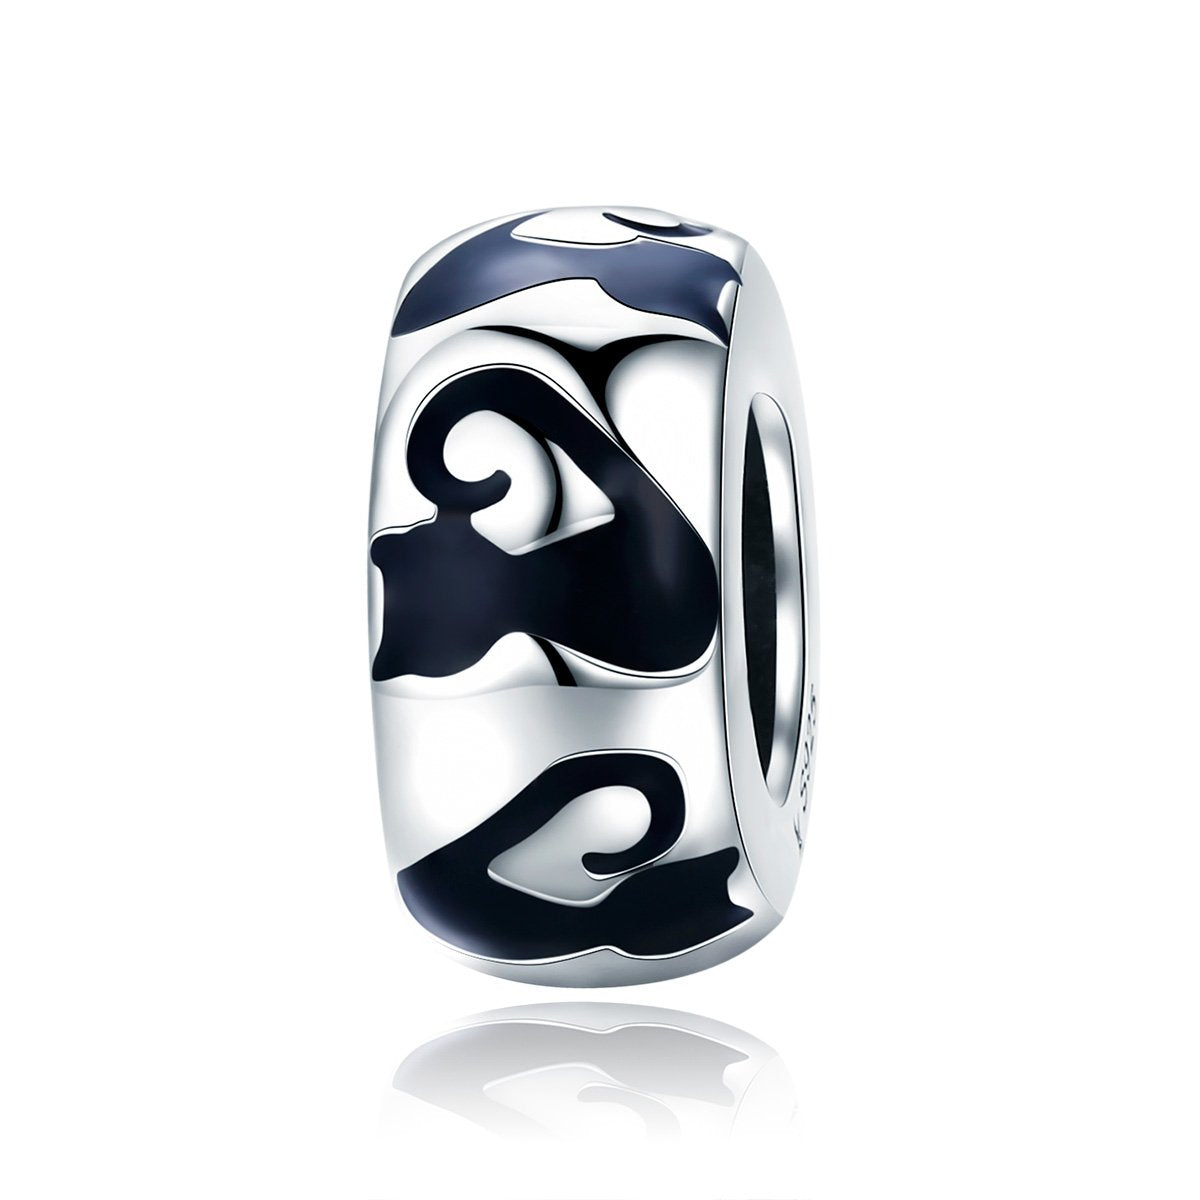 Sterling 925 silver charm the black cat circle pendant fits Pandora charm and European charm bracelet Xaxe.com